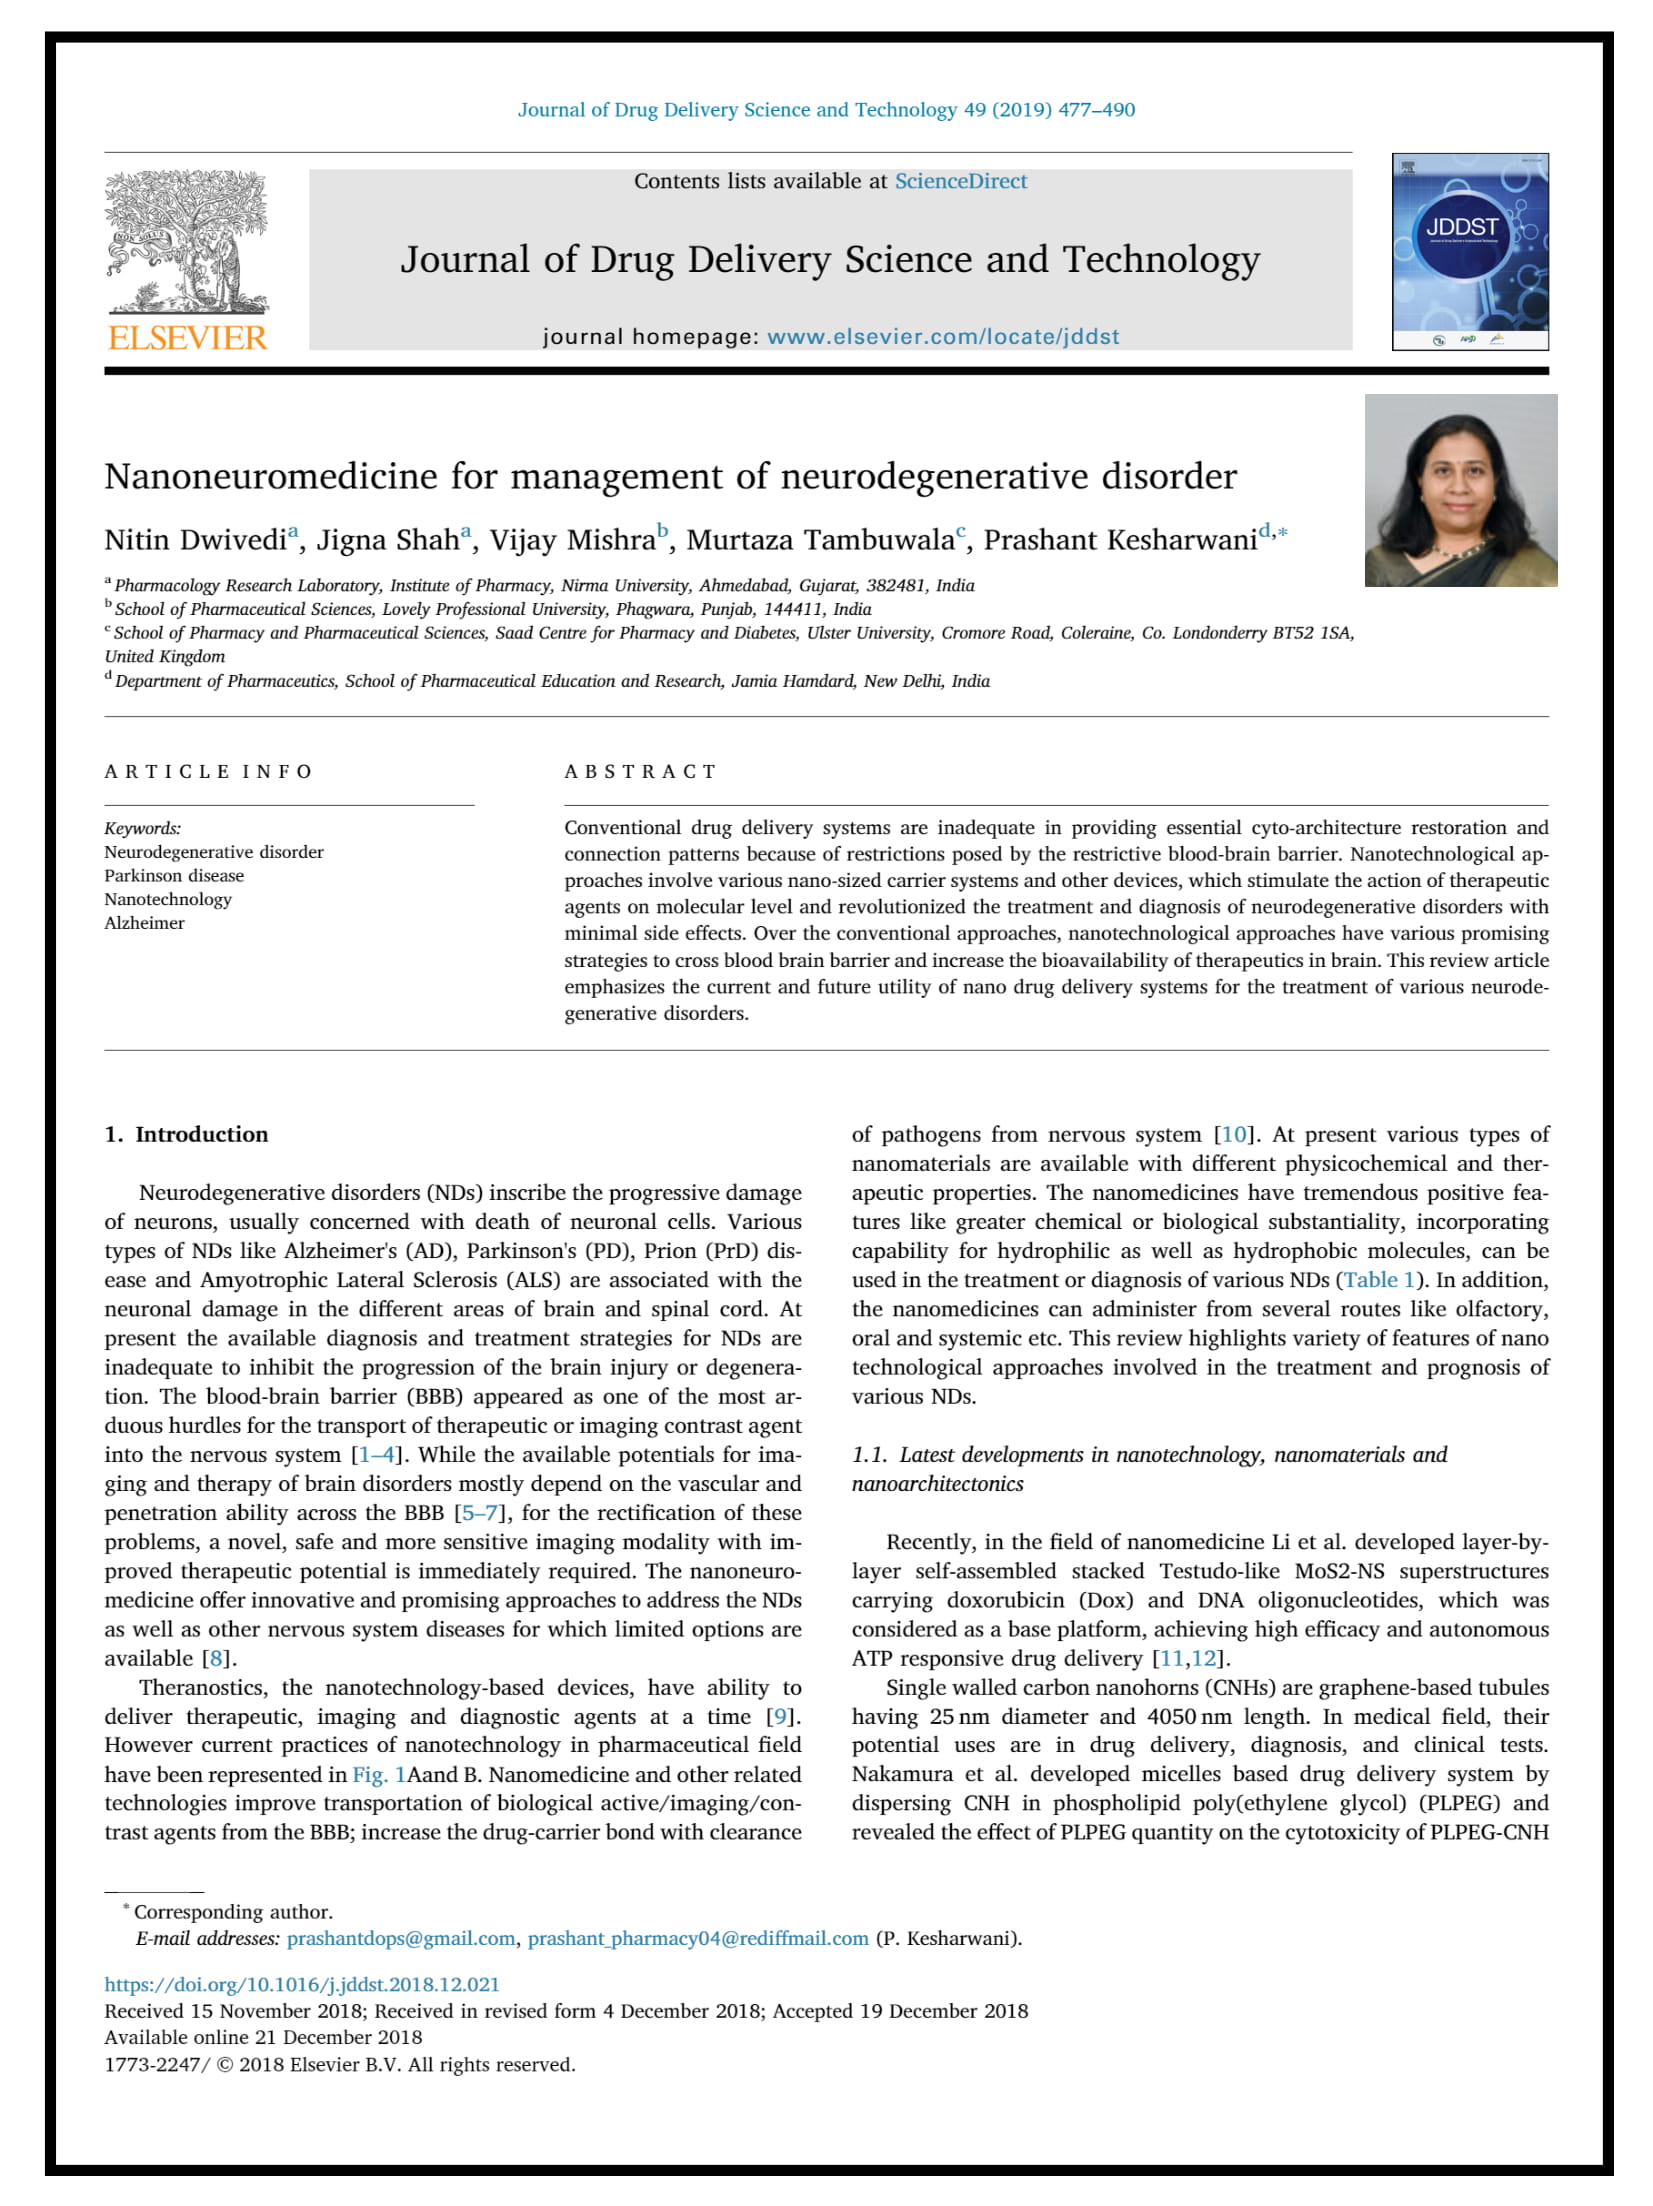 Nanoneuromedicine for management of neurodegenerative disorder